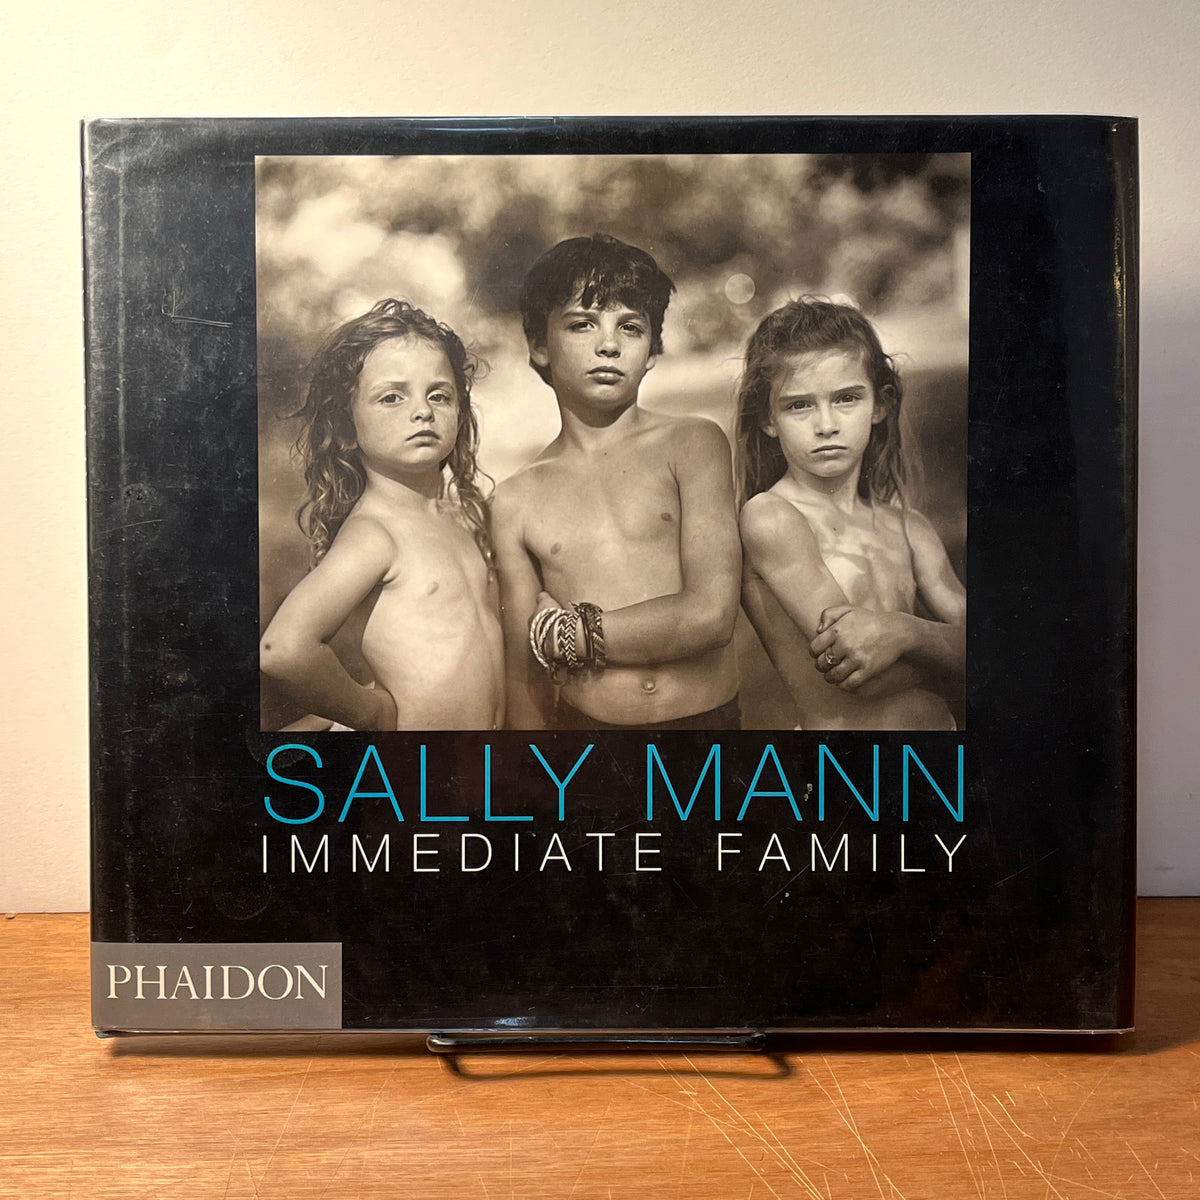 Sally Mann: Immediate Family, Phaidon, 1992 hardcover, Near Fine